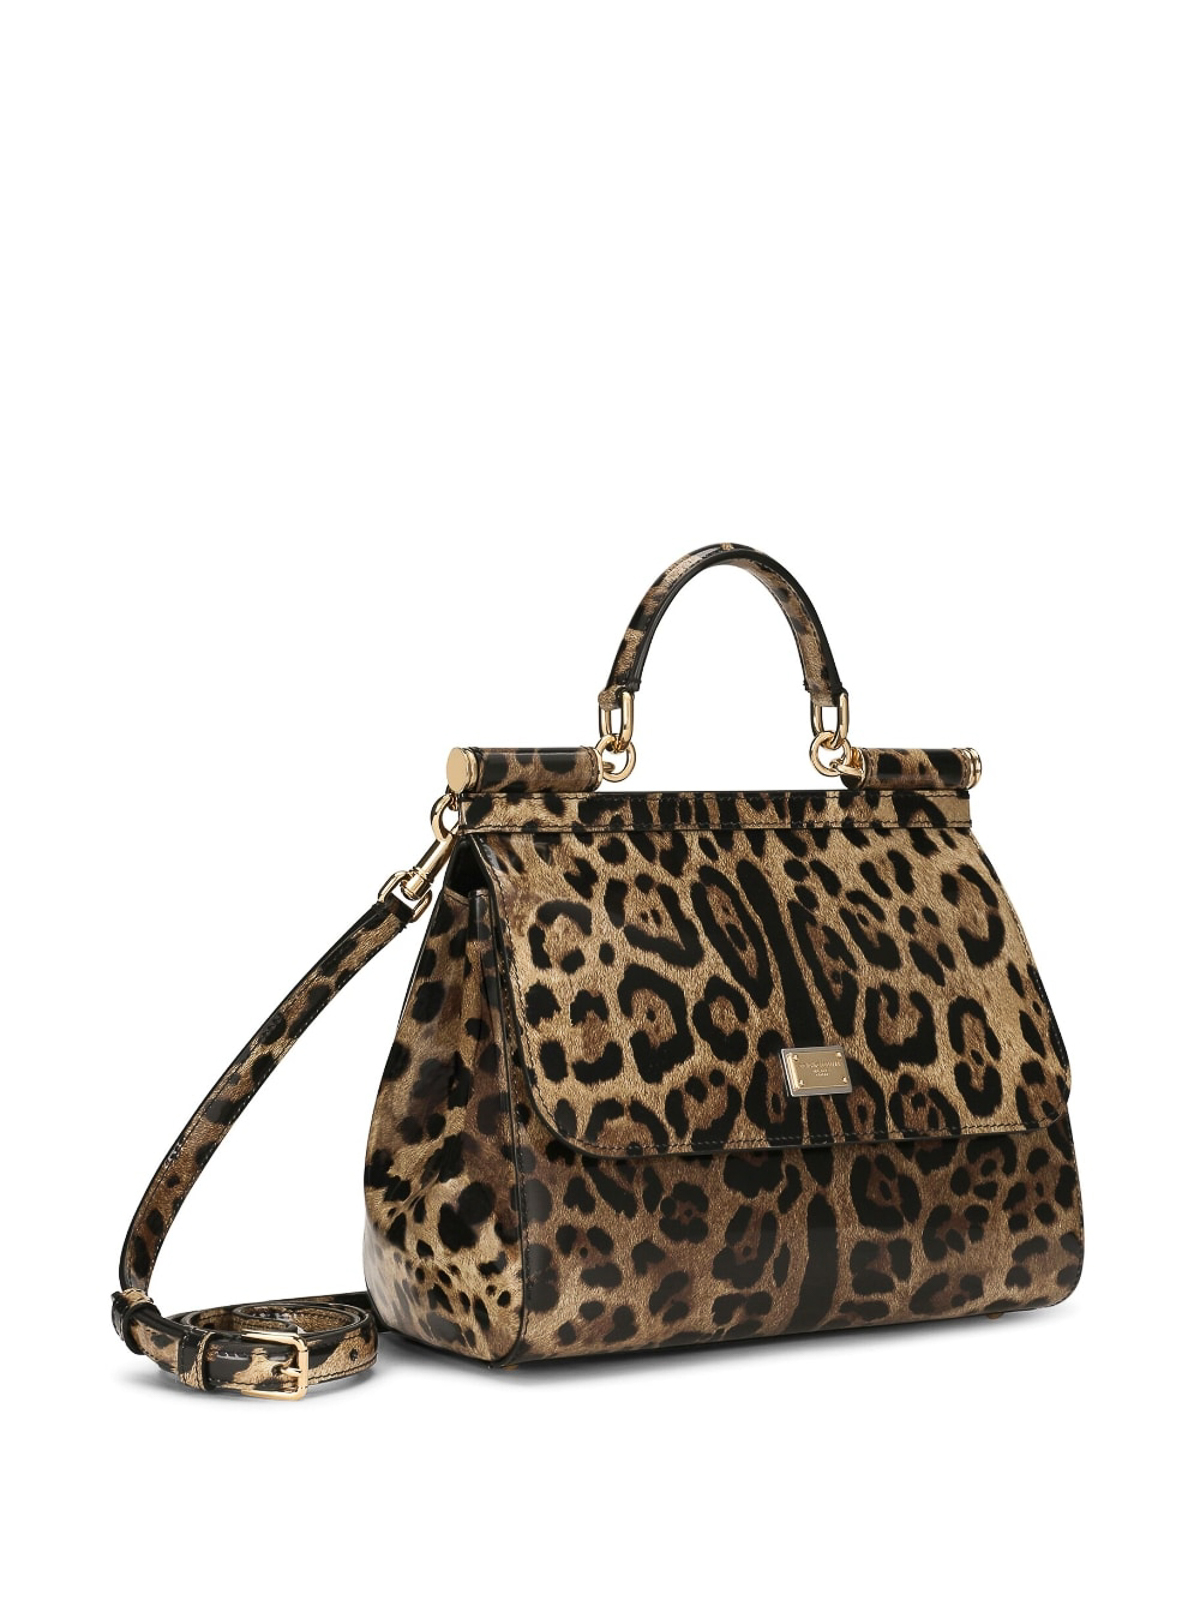 Dolce & Gabbana, Bags, Dolce Gabbana Cheetah Print Bag